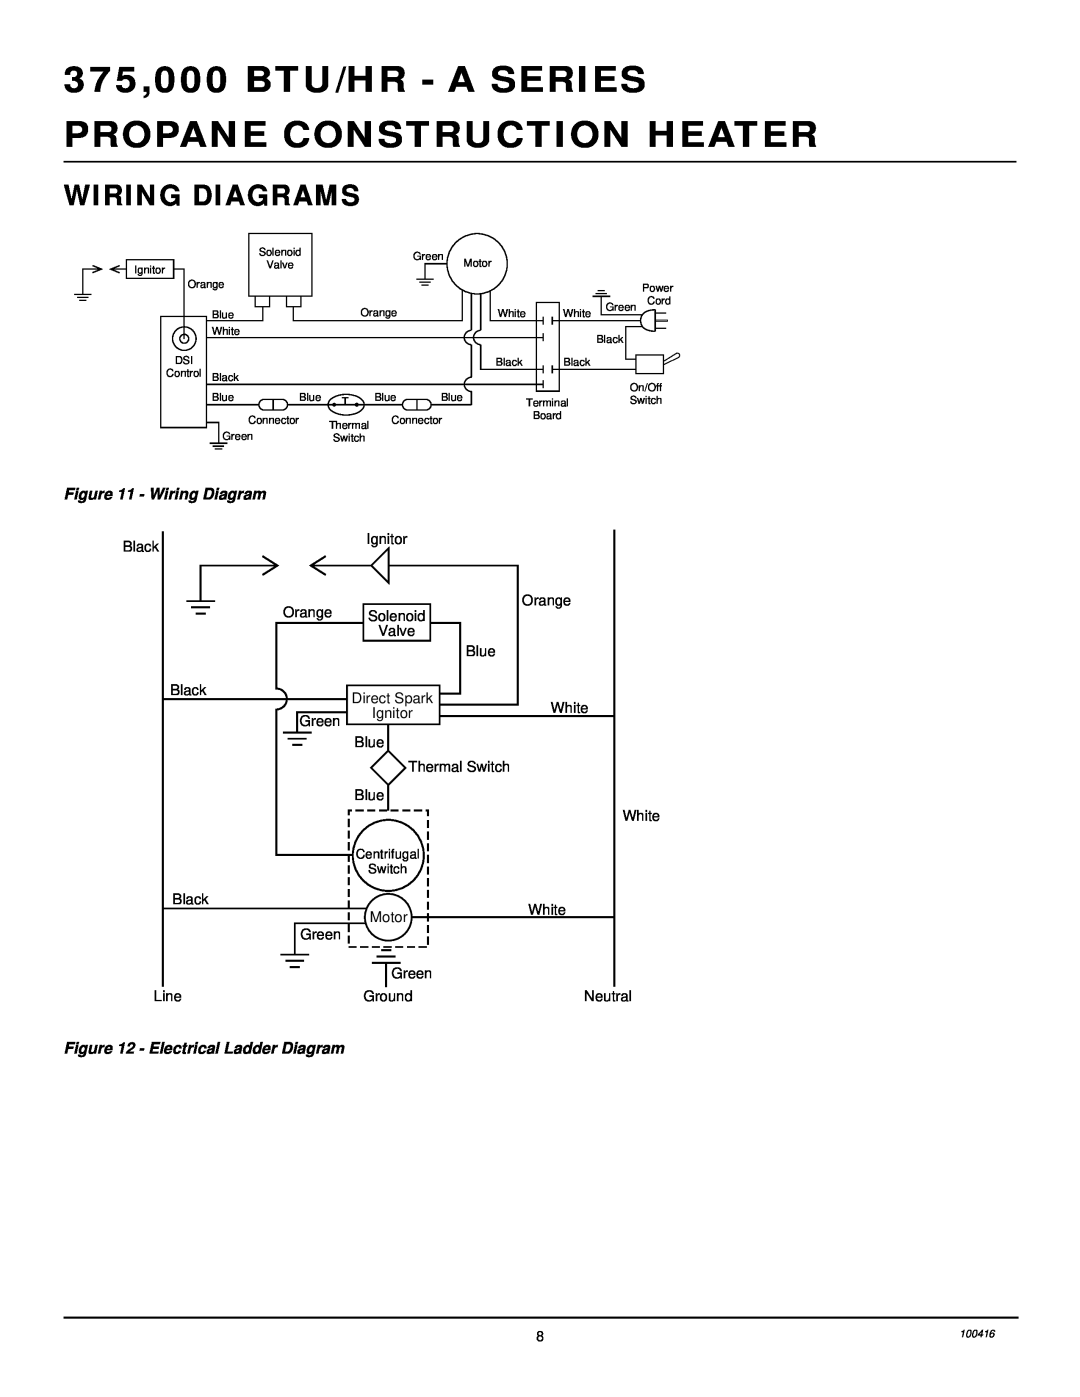 Desa BLP375A, RLP375A Wiring Diagrams, 375,000 BTU/HR - A SERIES, Propane Construction Heater, Electrical Ladder Diagram 